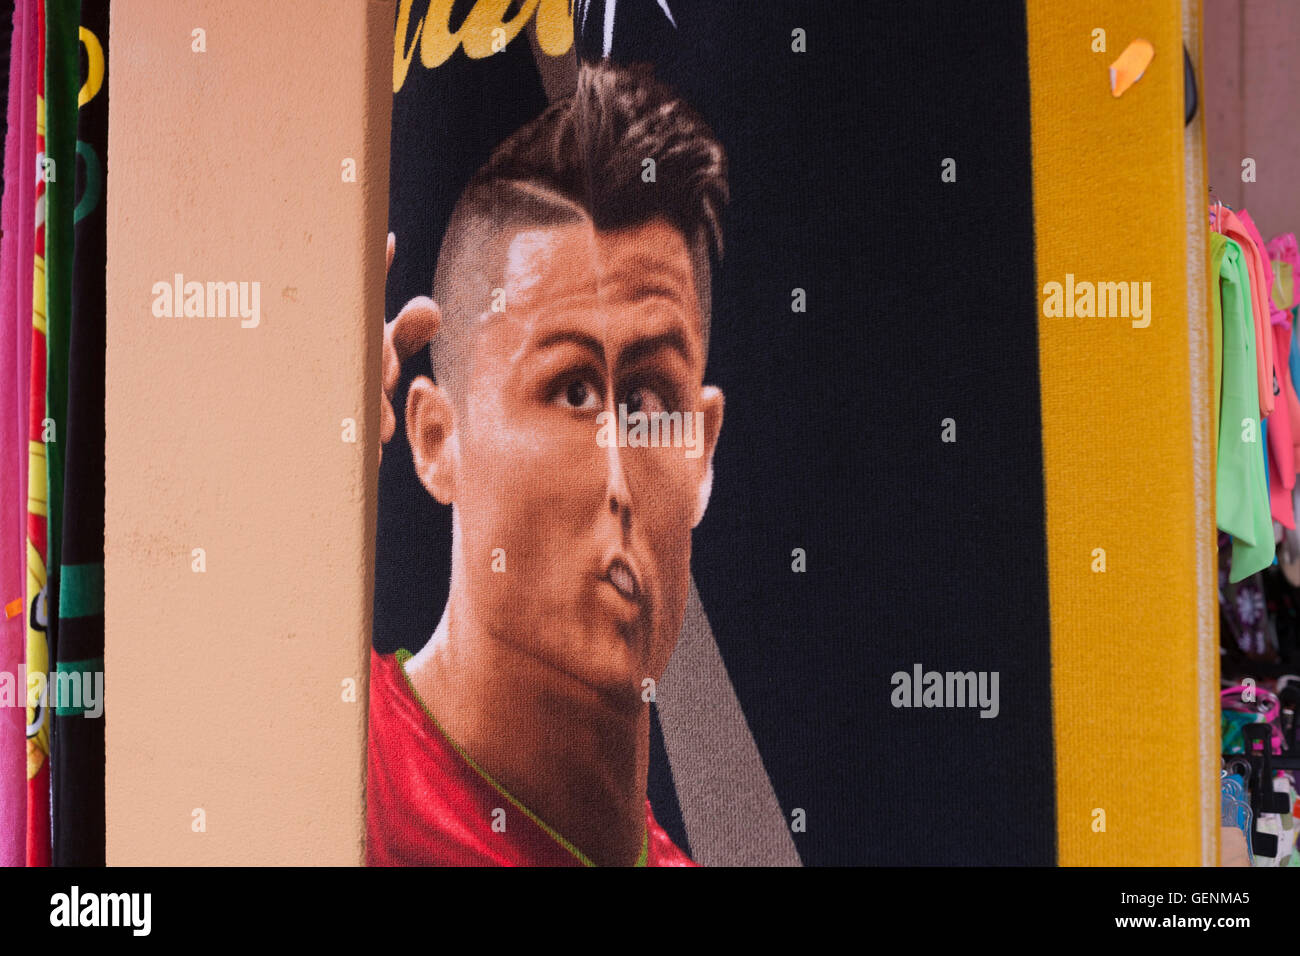 Nationalheld, verzerrt Fußballer Christiano Ronaldo Gesicht auf Strand  Handtuch waren in Barra, Costa Nova, Aveiro, Portugal Stockfotografie -  Alamy